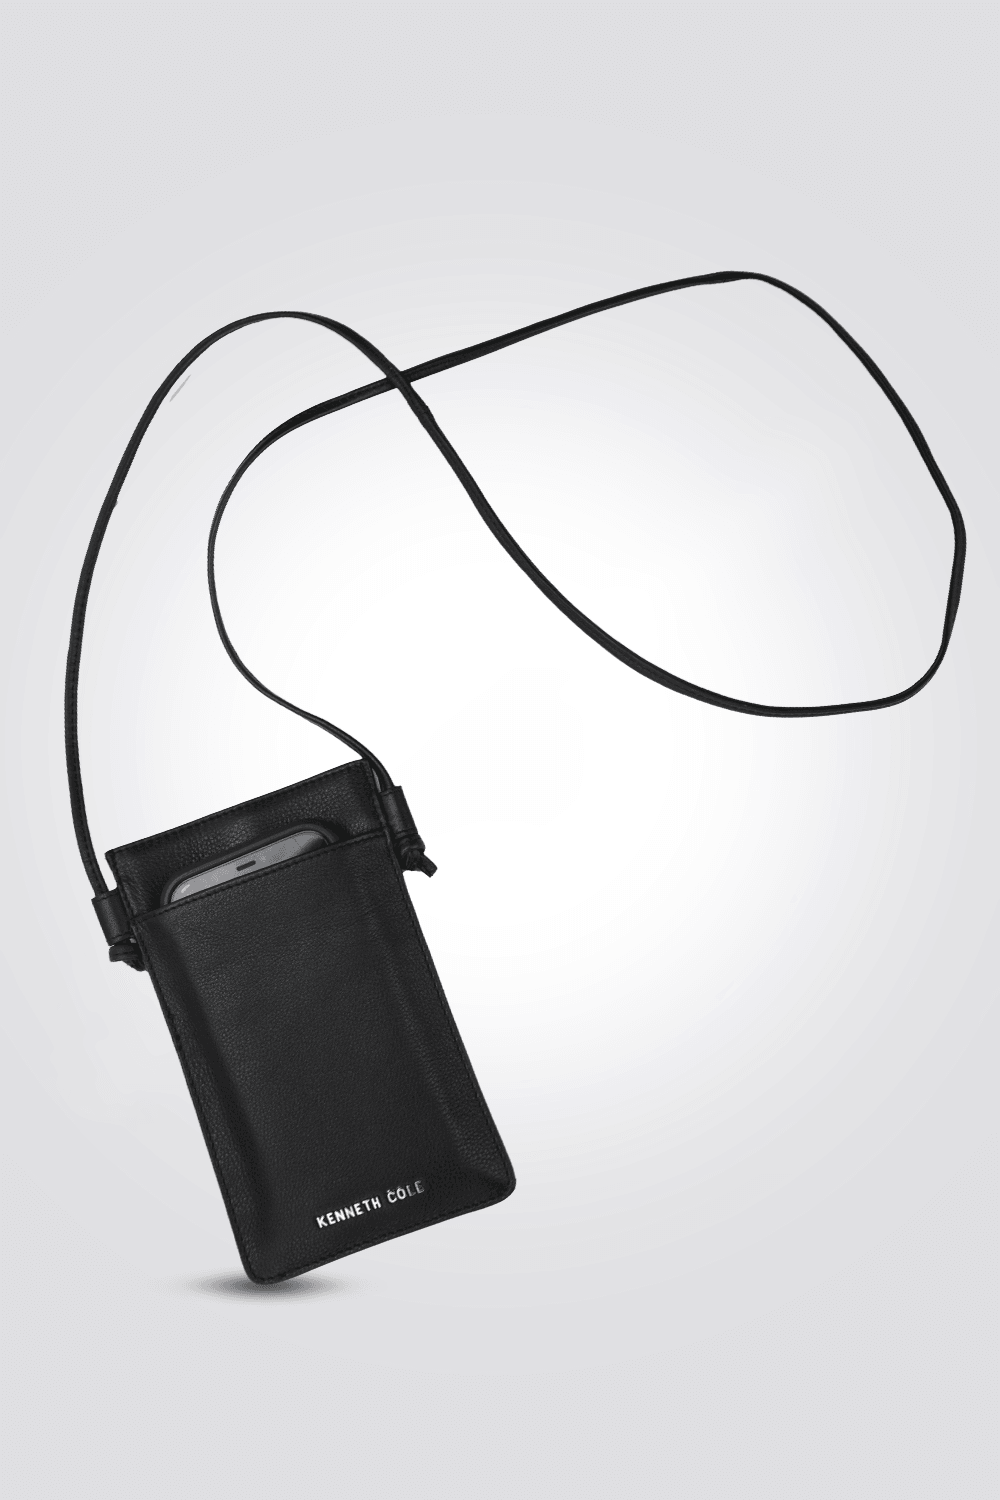 KENNETH COLE - נרתיק עור לטלפון בצבע שחור - MASHBIR//365